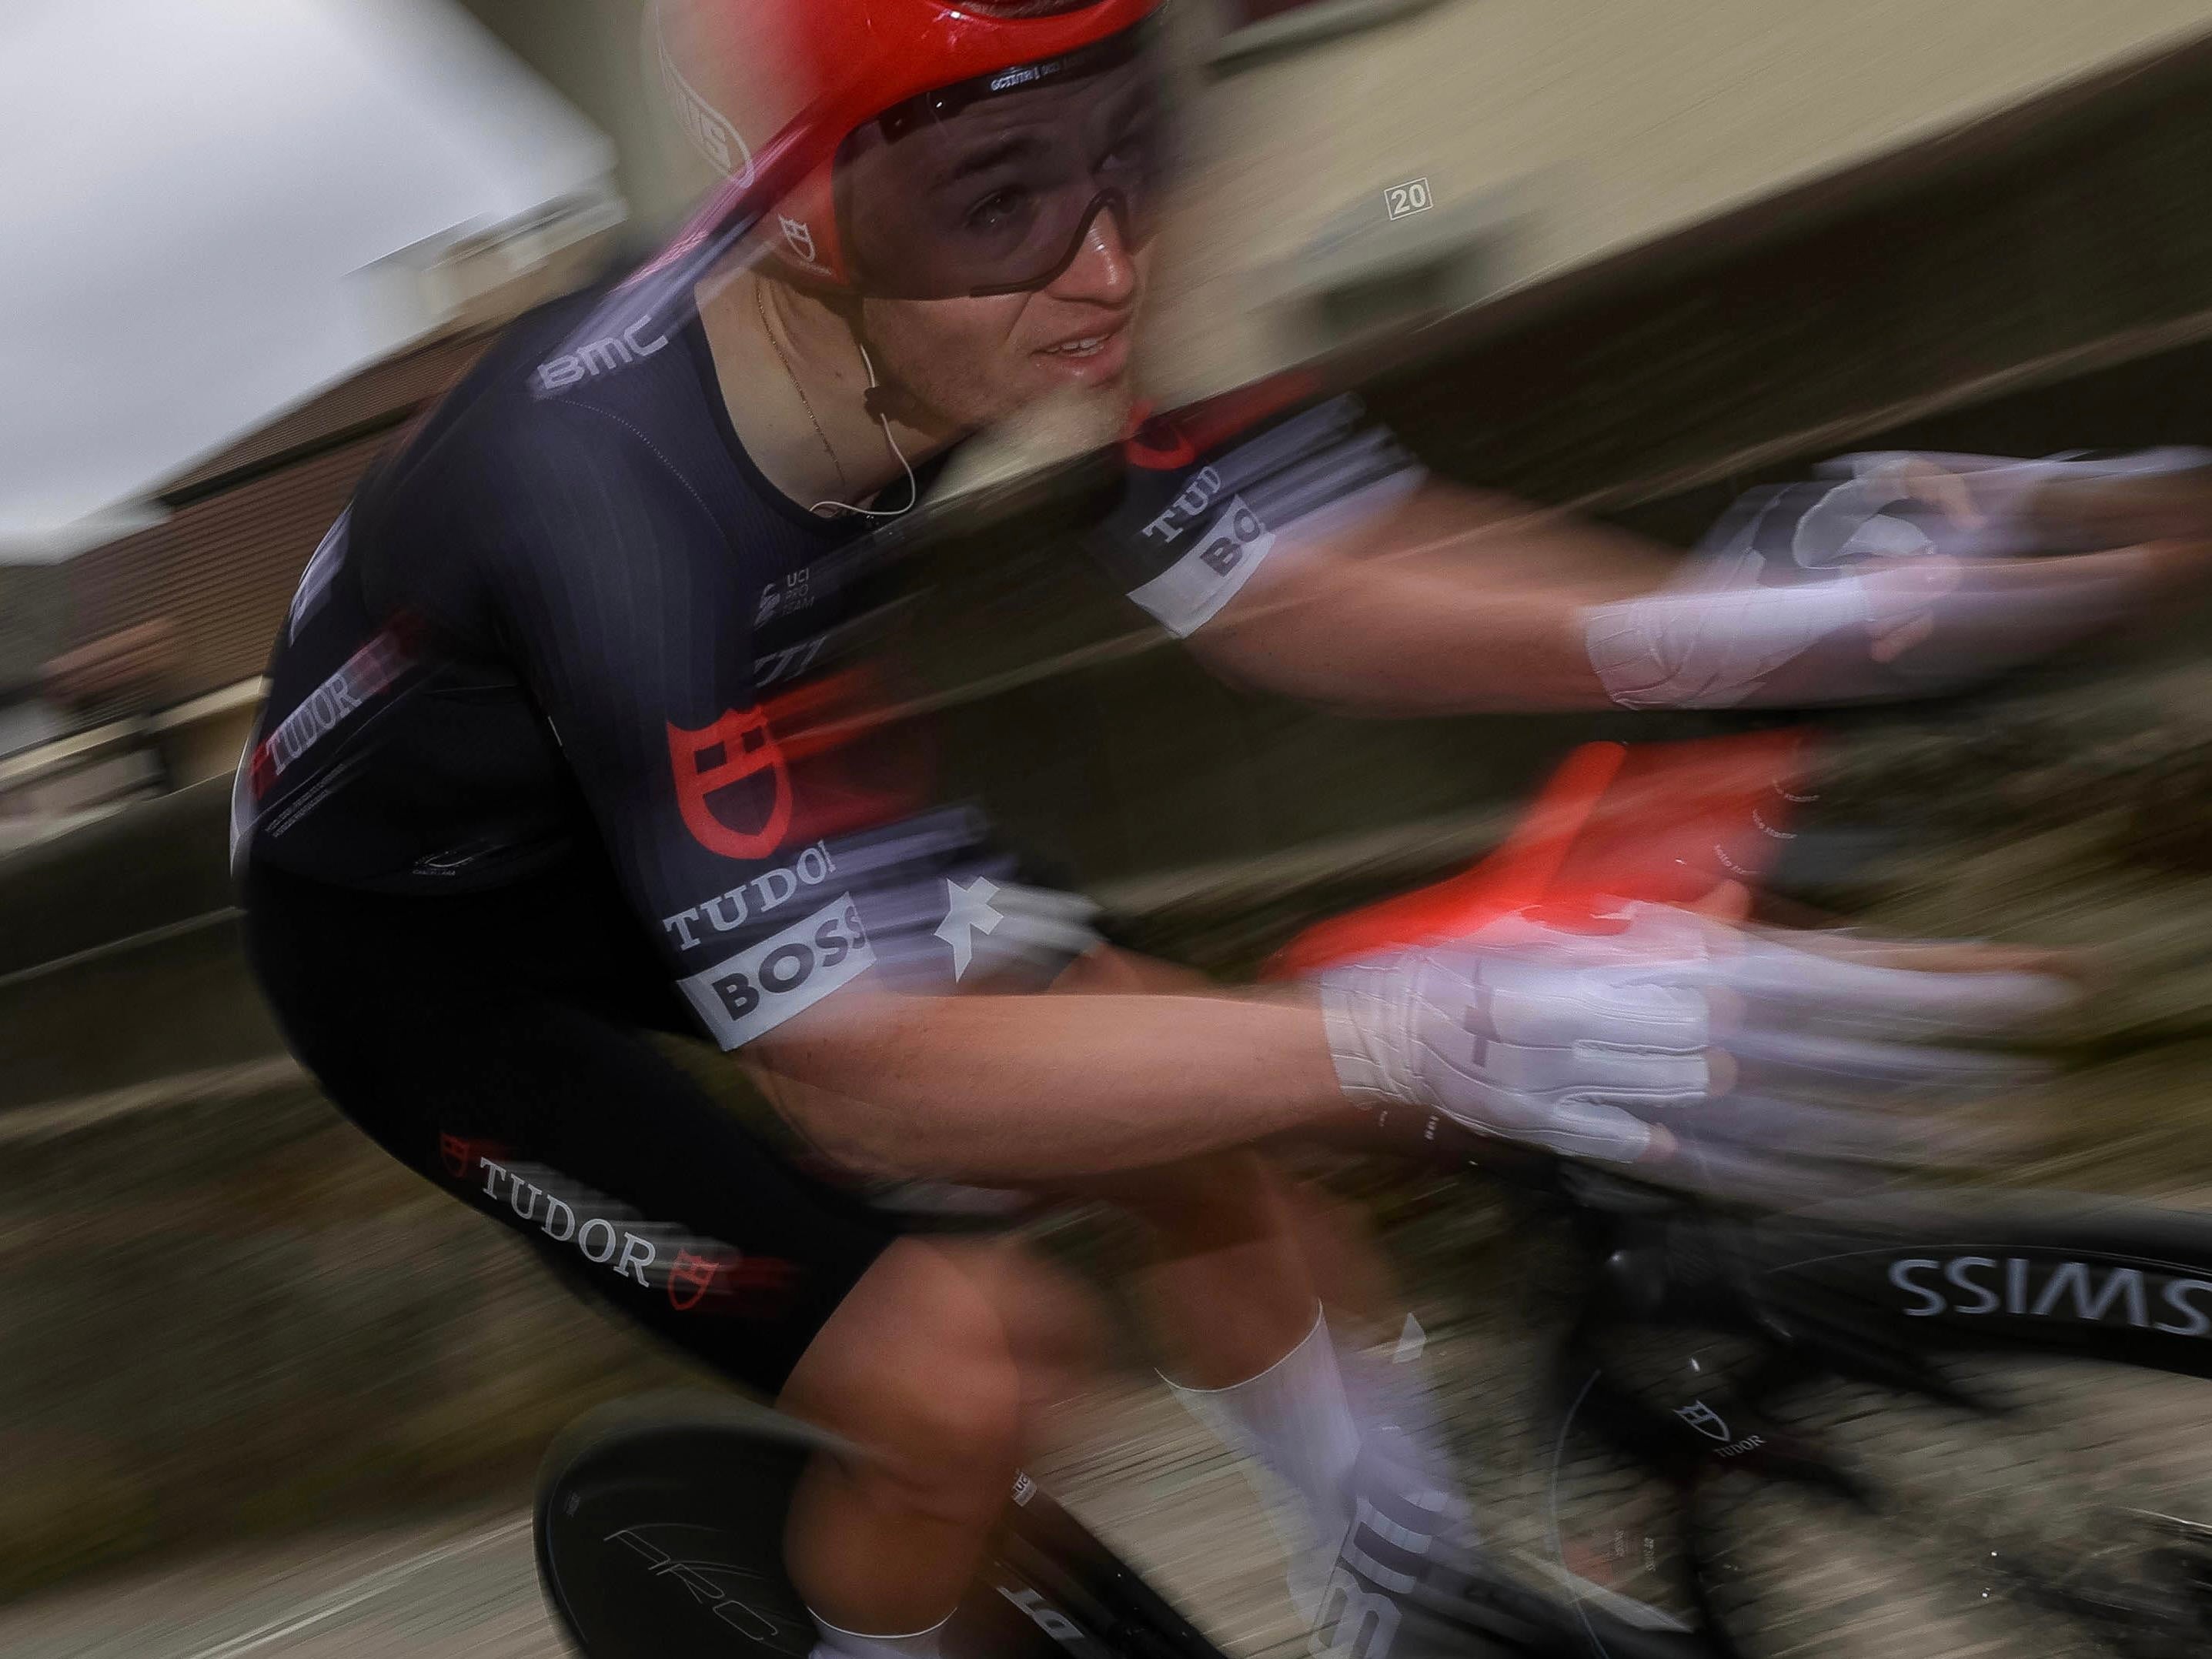 Tudor Pro Cycling's Zijlaard wins prologue Tour de Romandie in Cancellara's backyard